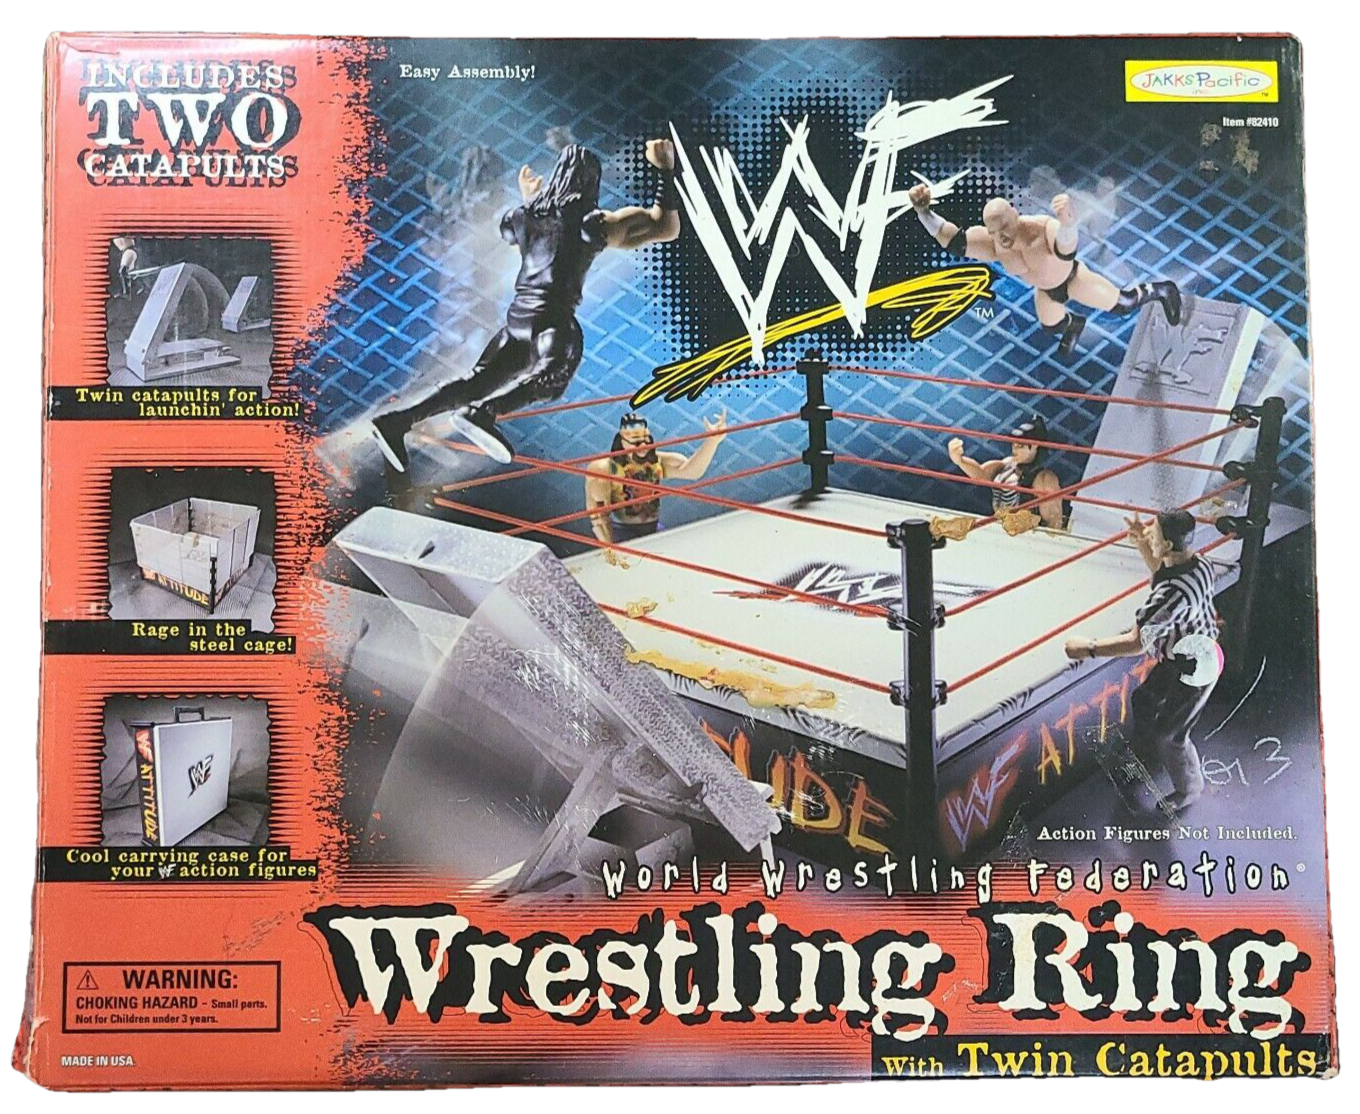 1998 WWF Jakks Pacific "Attitude" Wrestling Ring